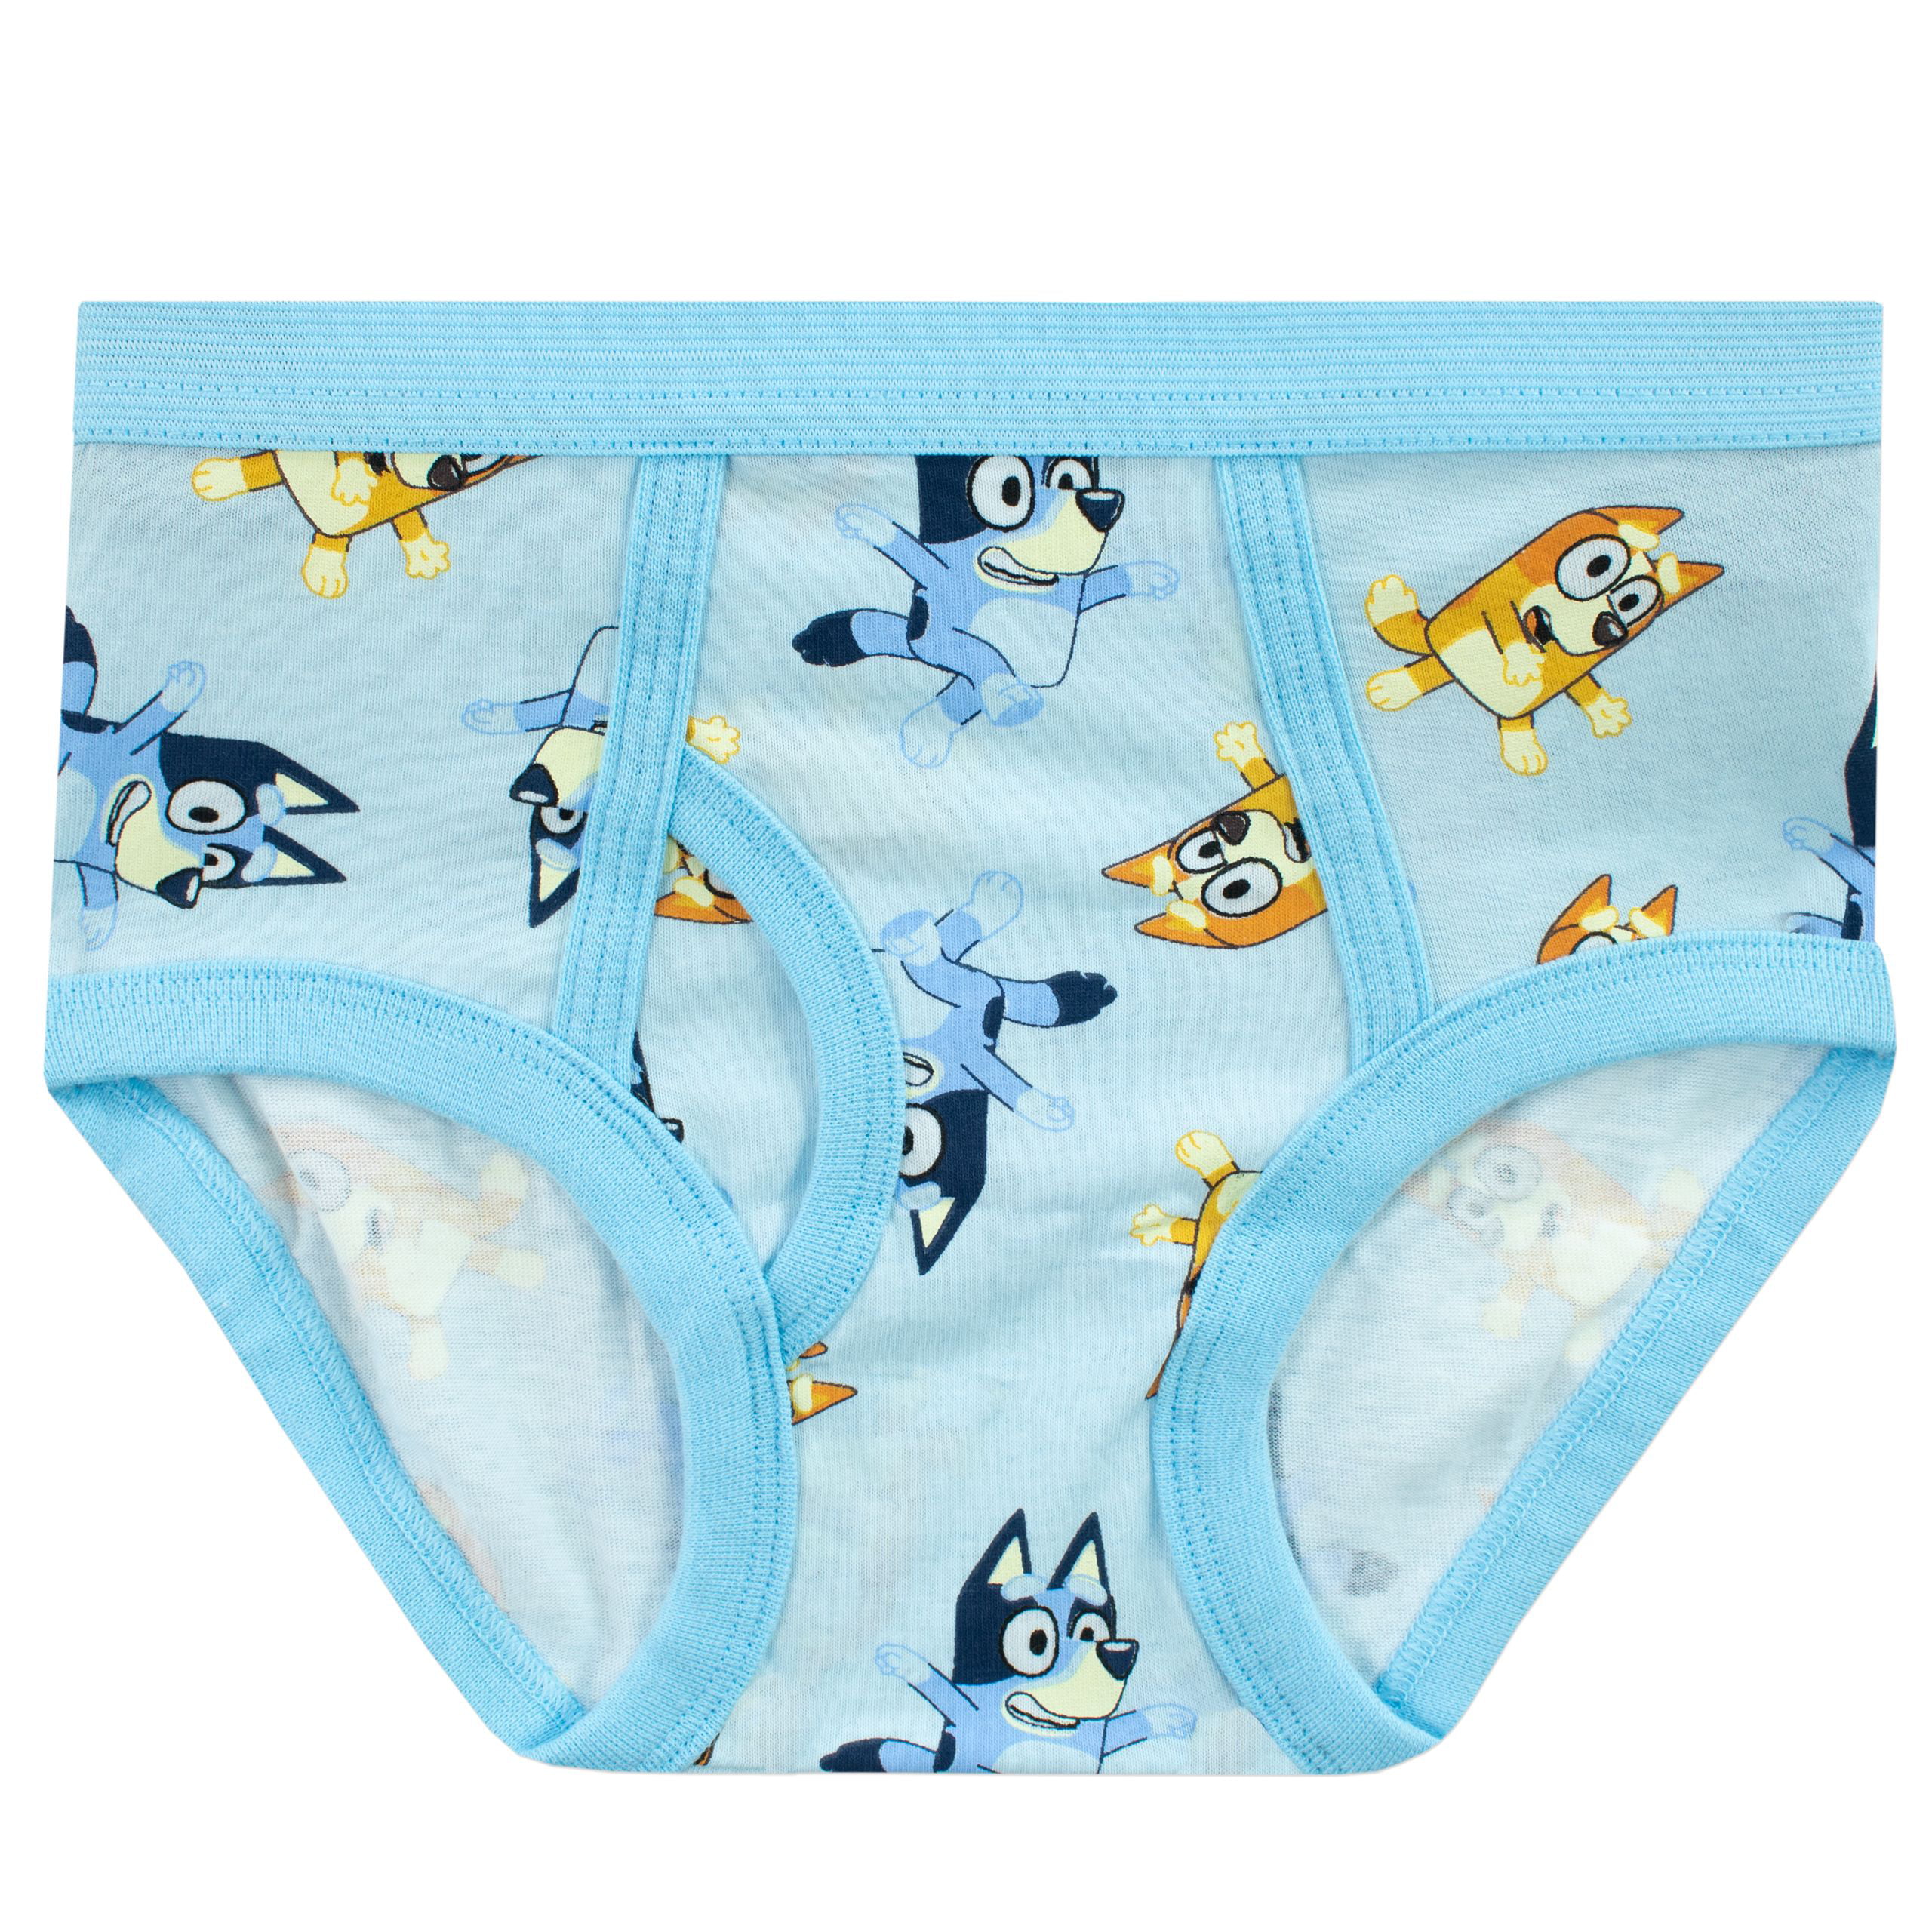 Buy Bluey Boys' Underwear Multipack, Bluey10pk, 2-3T at